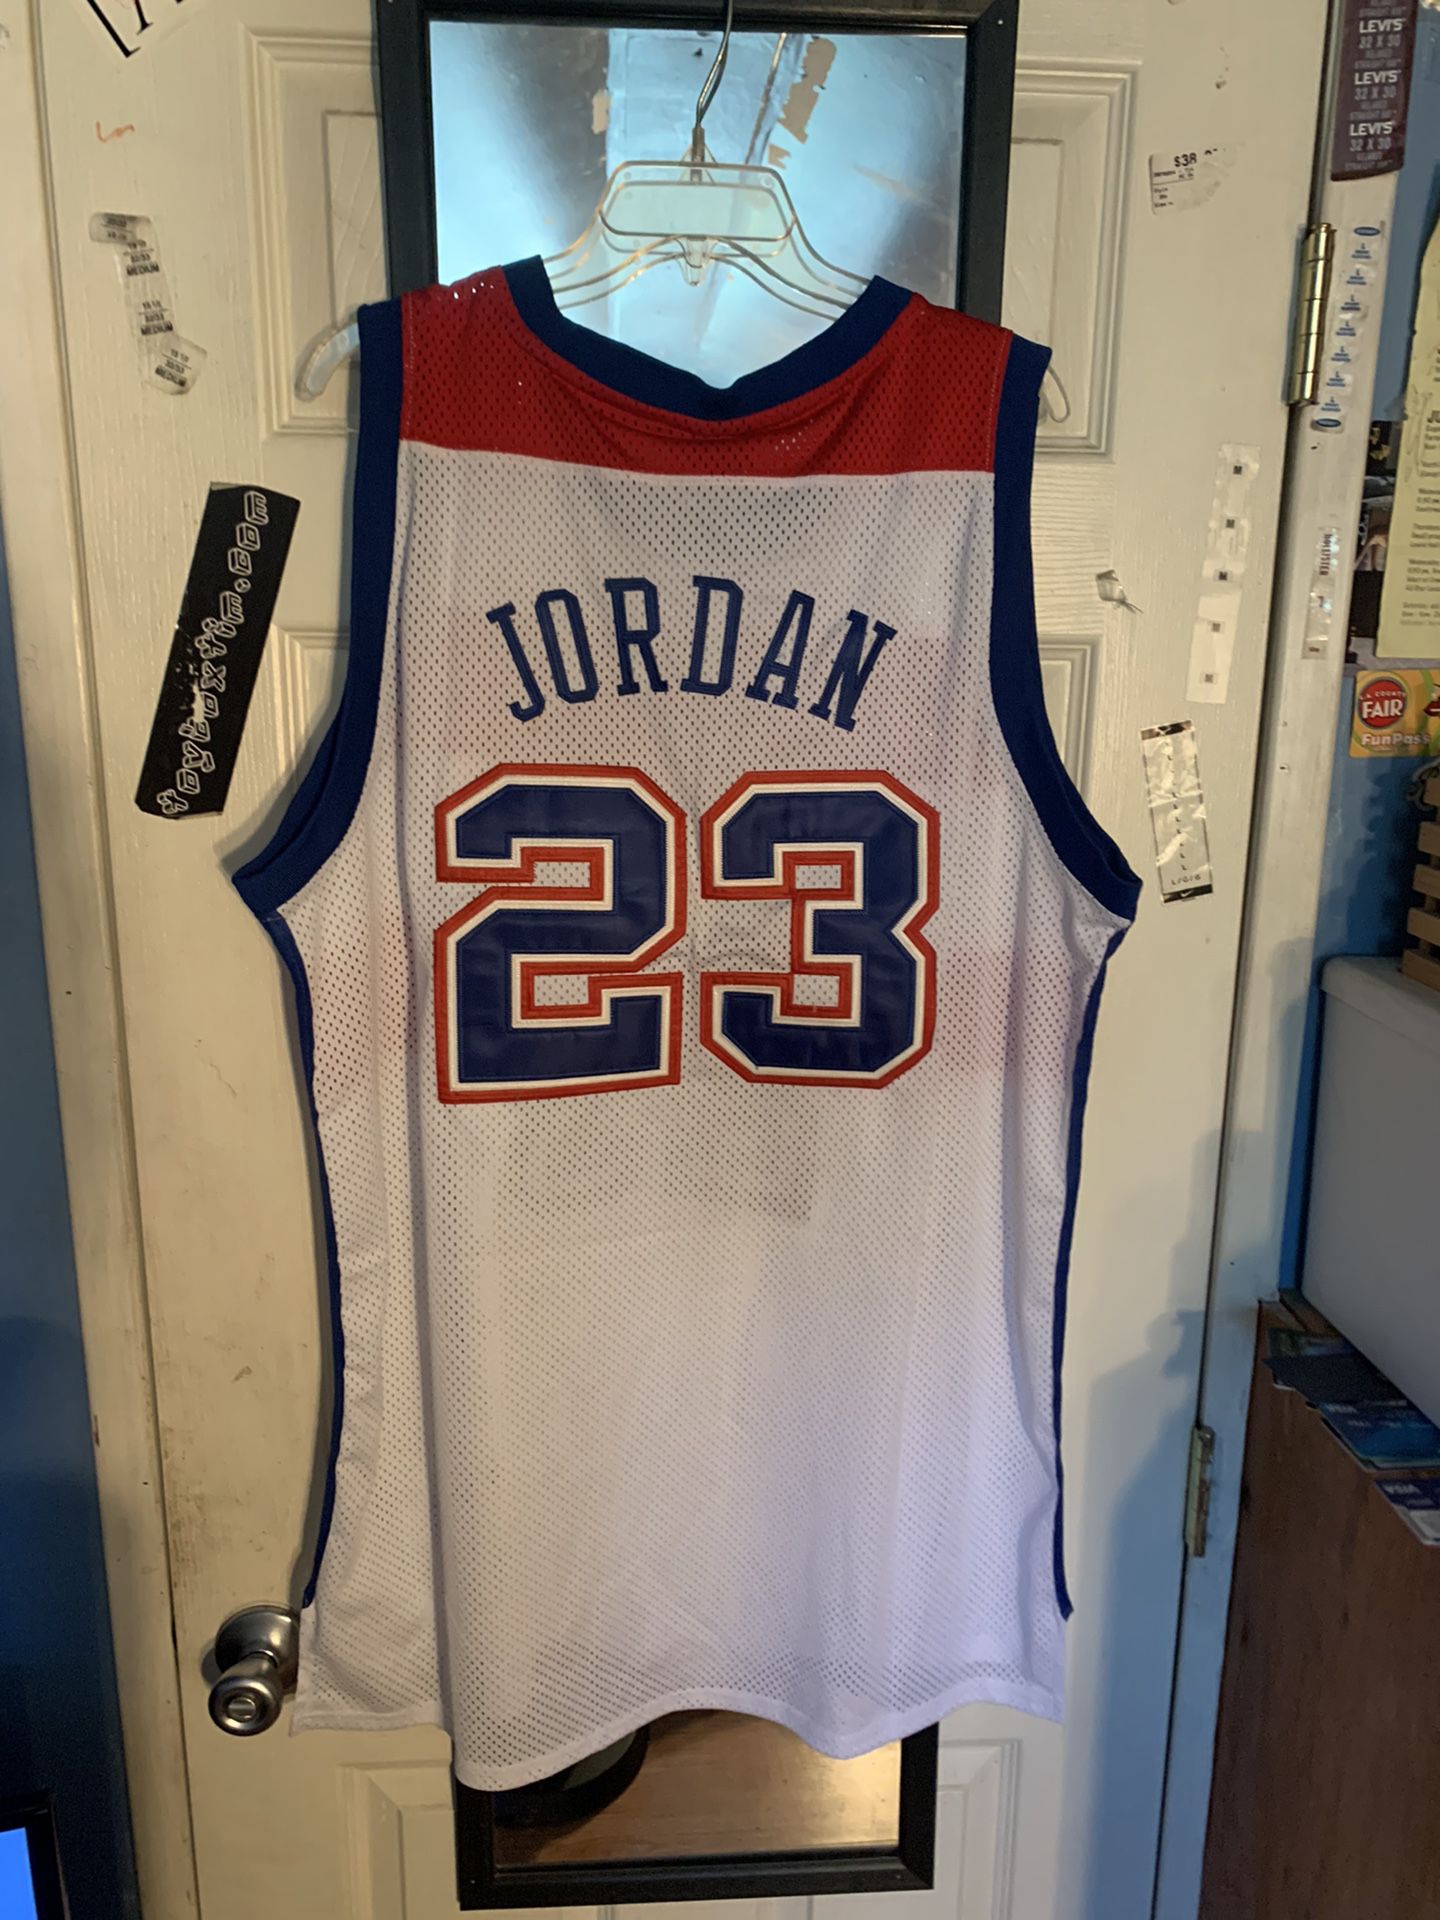 Michael Jordan Washington Bullets – Jersey Crate